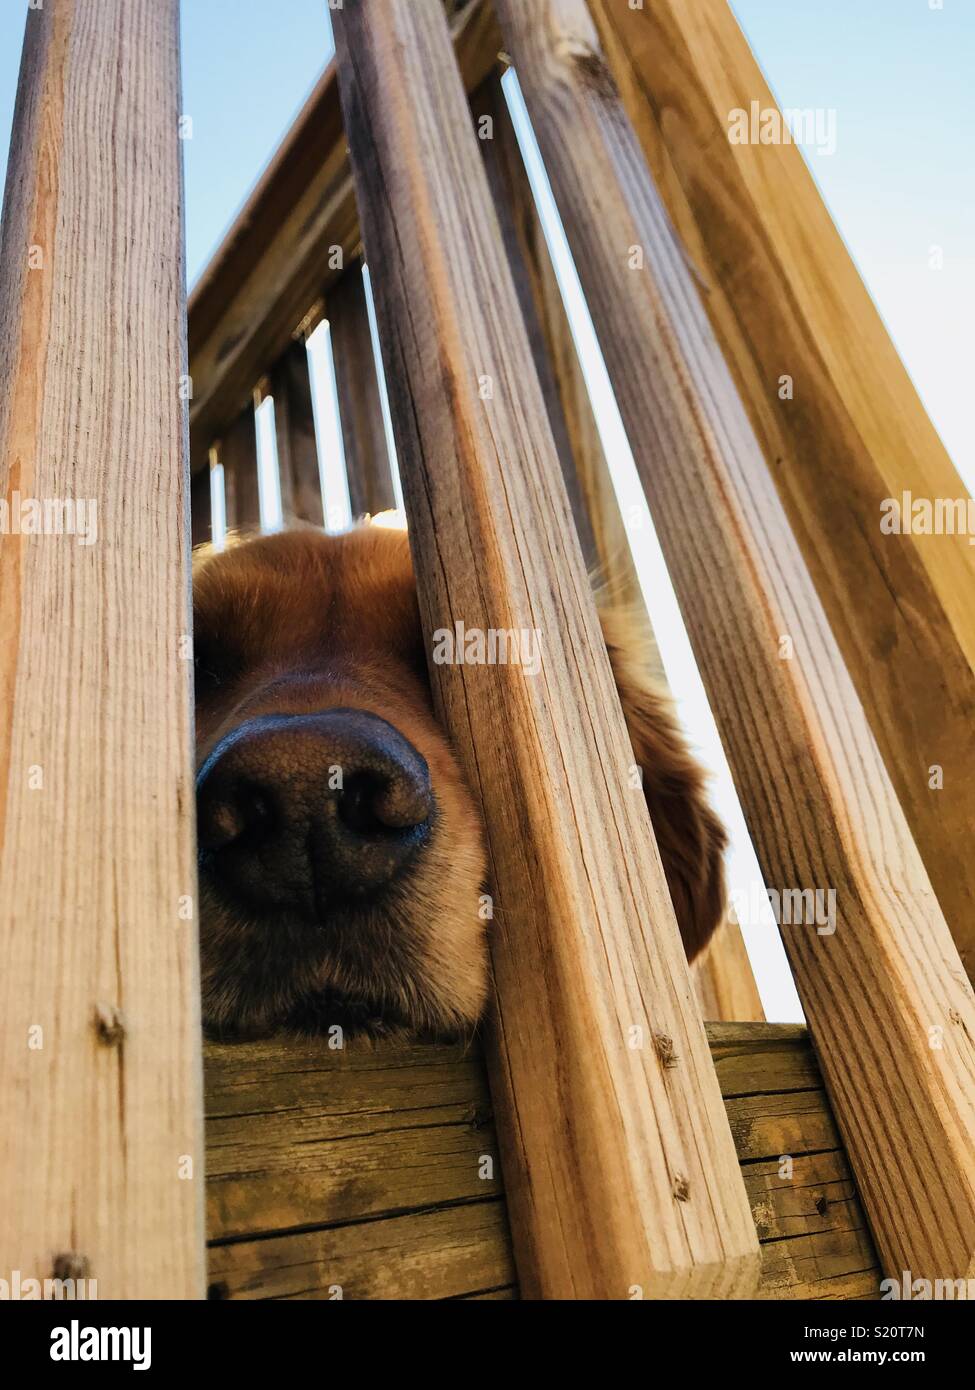 Golden retriever poking nose through fence Stock Photo